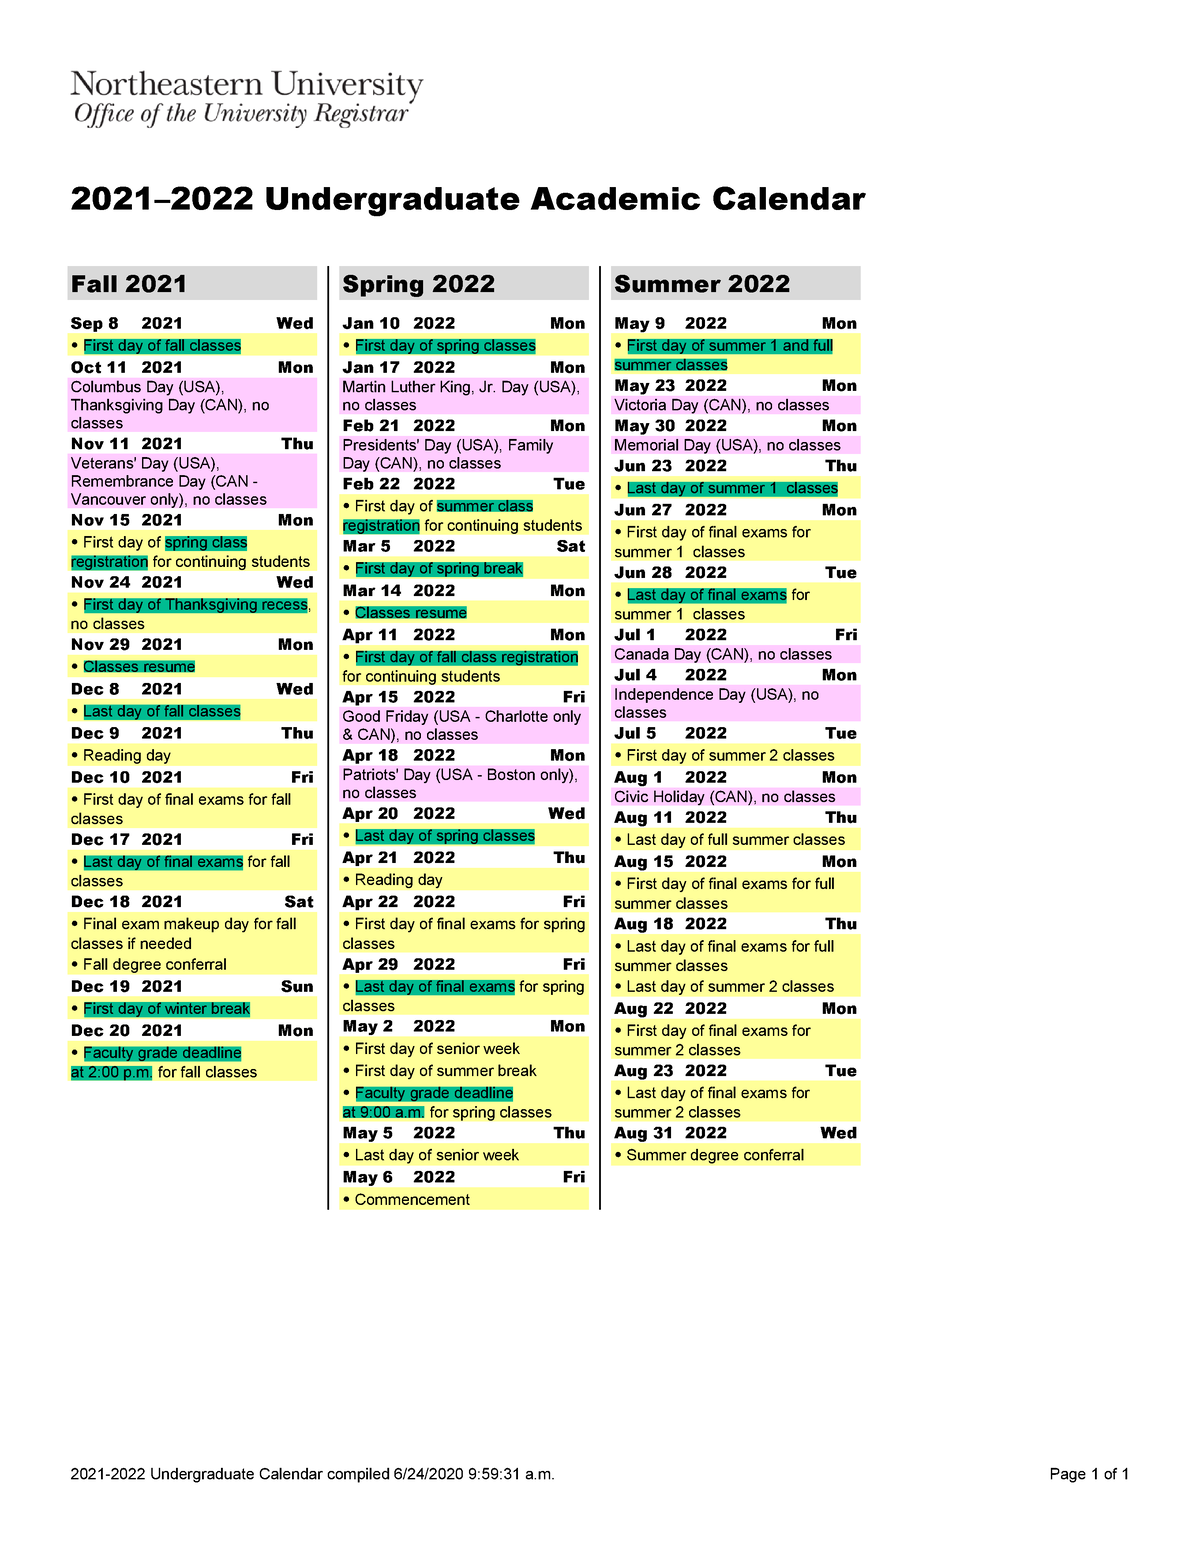 Emory Academic Calendar Spring 2022 2021-2022 Northeastern Calendar - 2021 -2022 Undergraduate Calendar  Compiled 6/24/2020 9:59:31 A. - Studocu